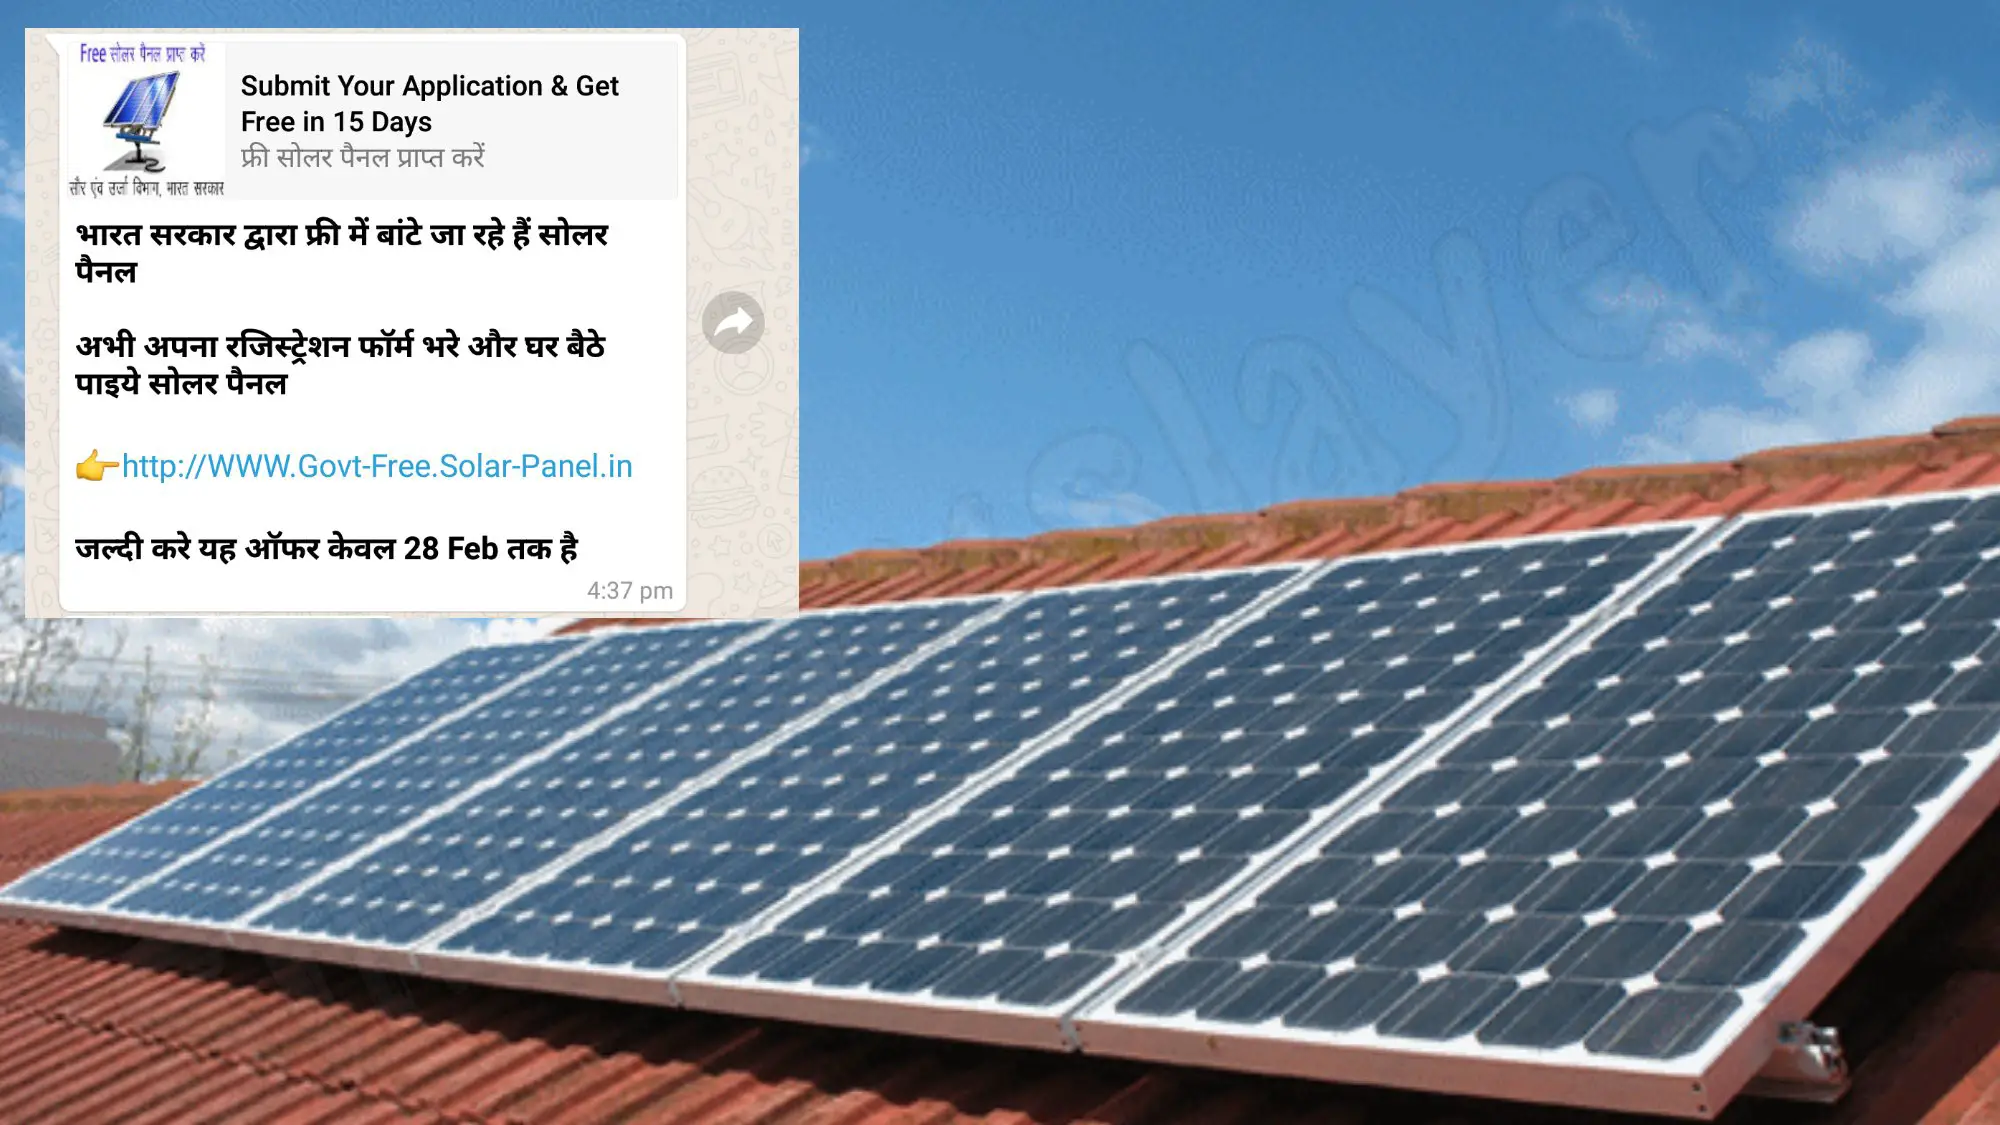 Free Solar Panels Government Scheme India